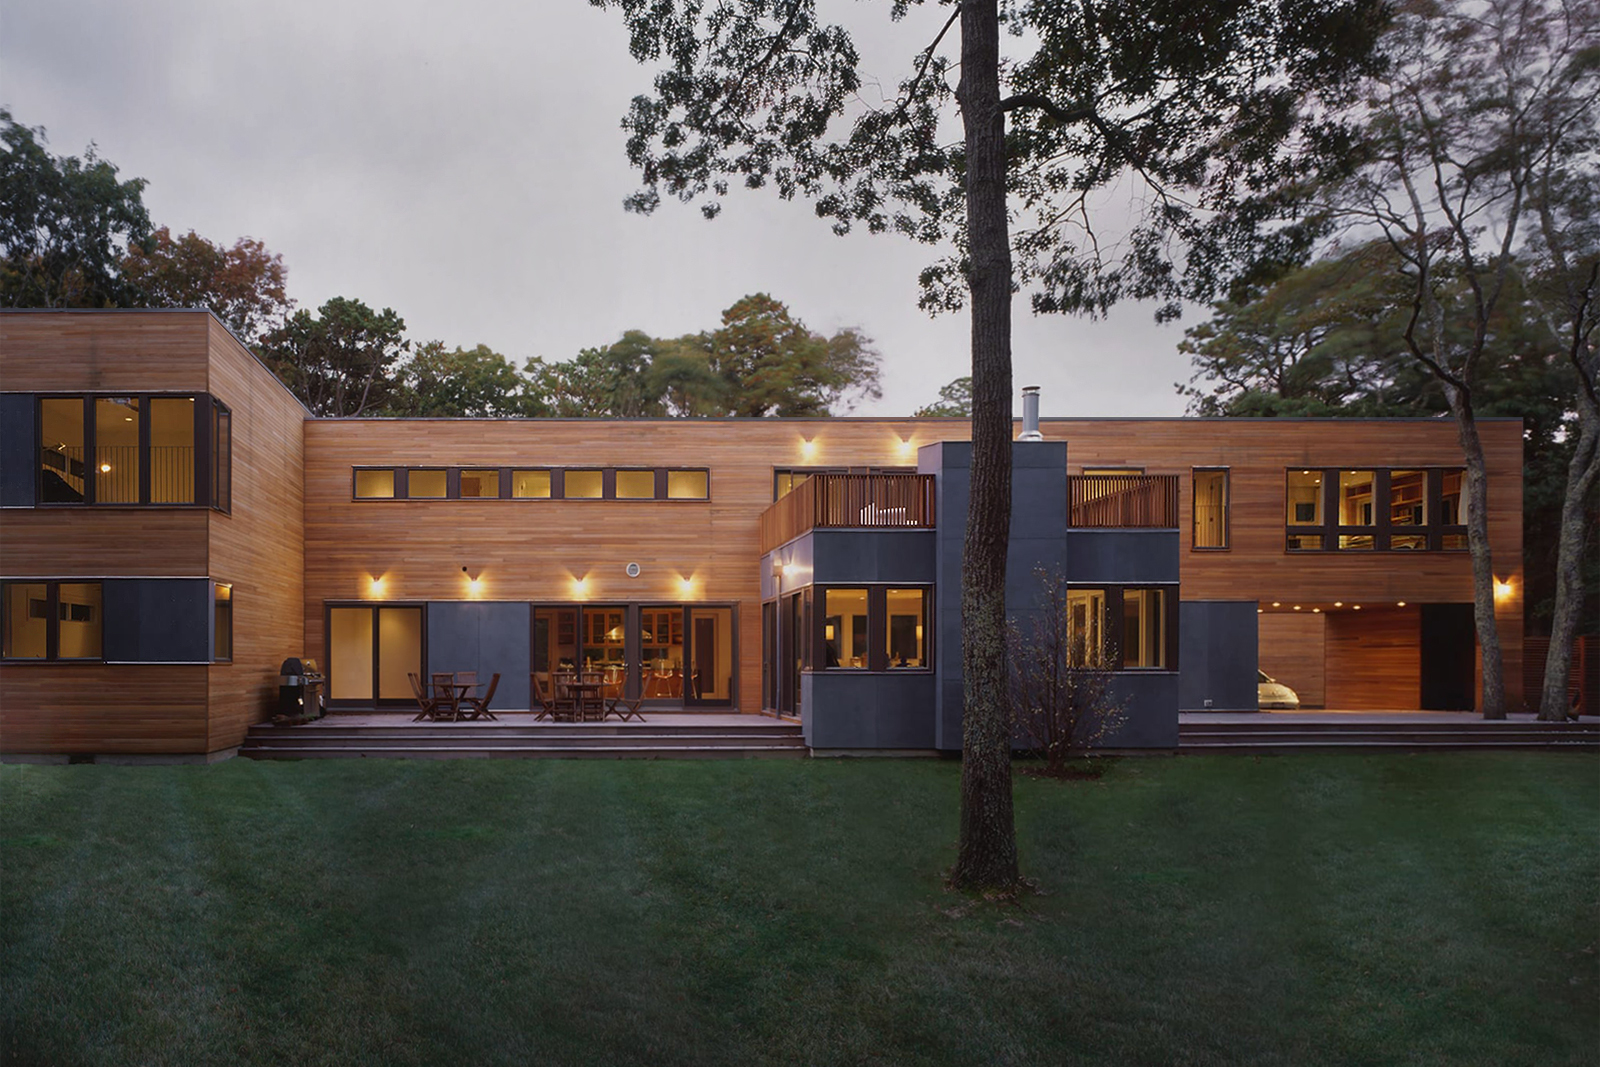 01-res4-resolution-4-architecture-modern-modular-home-prefab-house-swingline-exterior-dusk.jpg